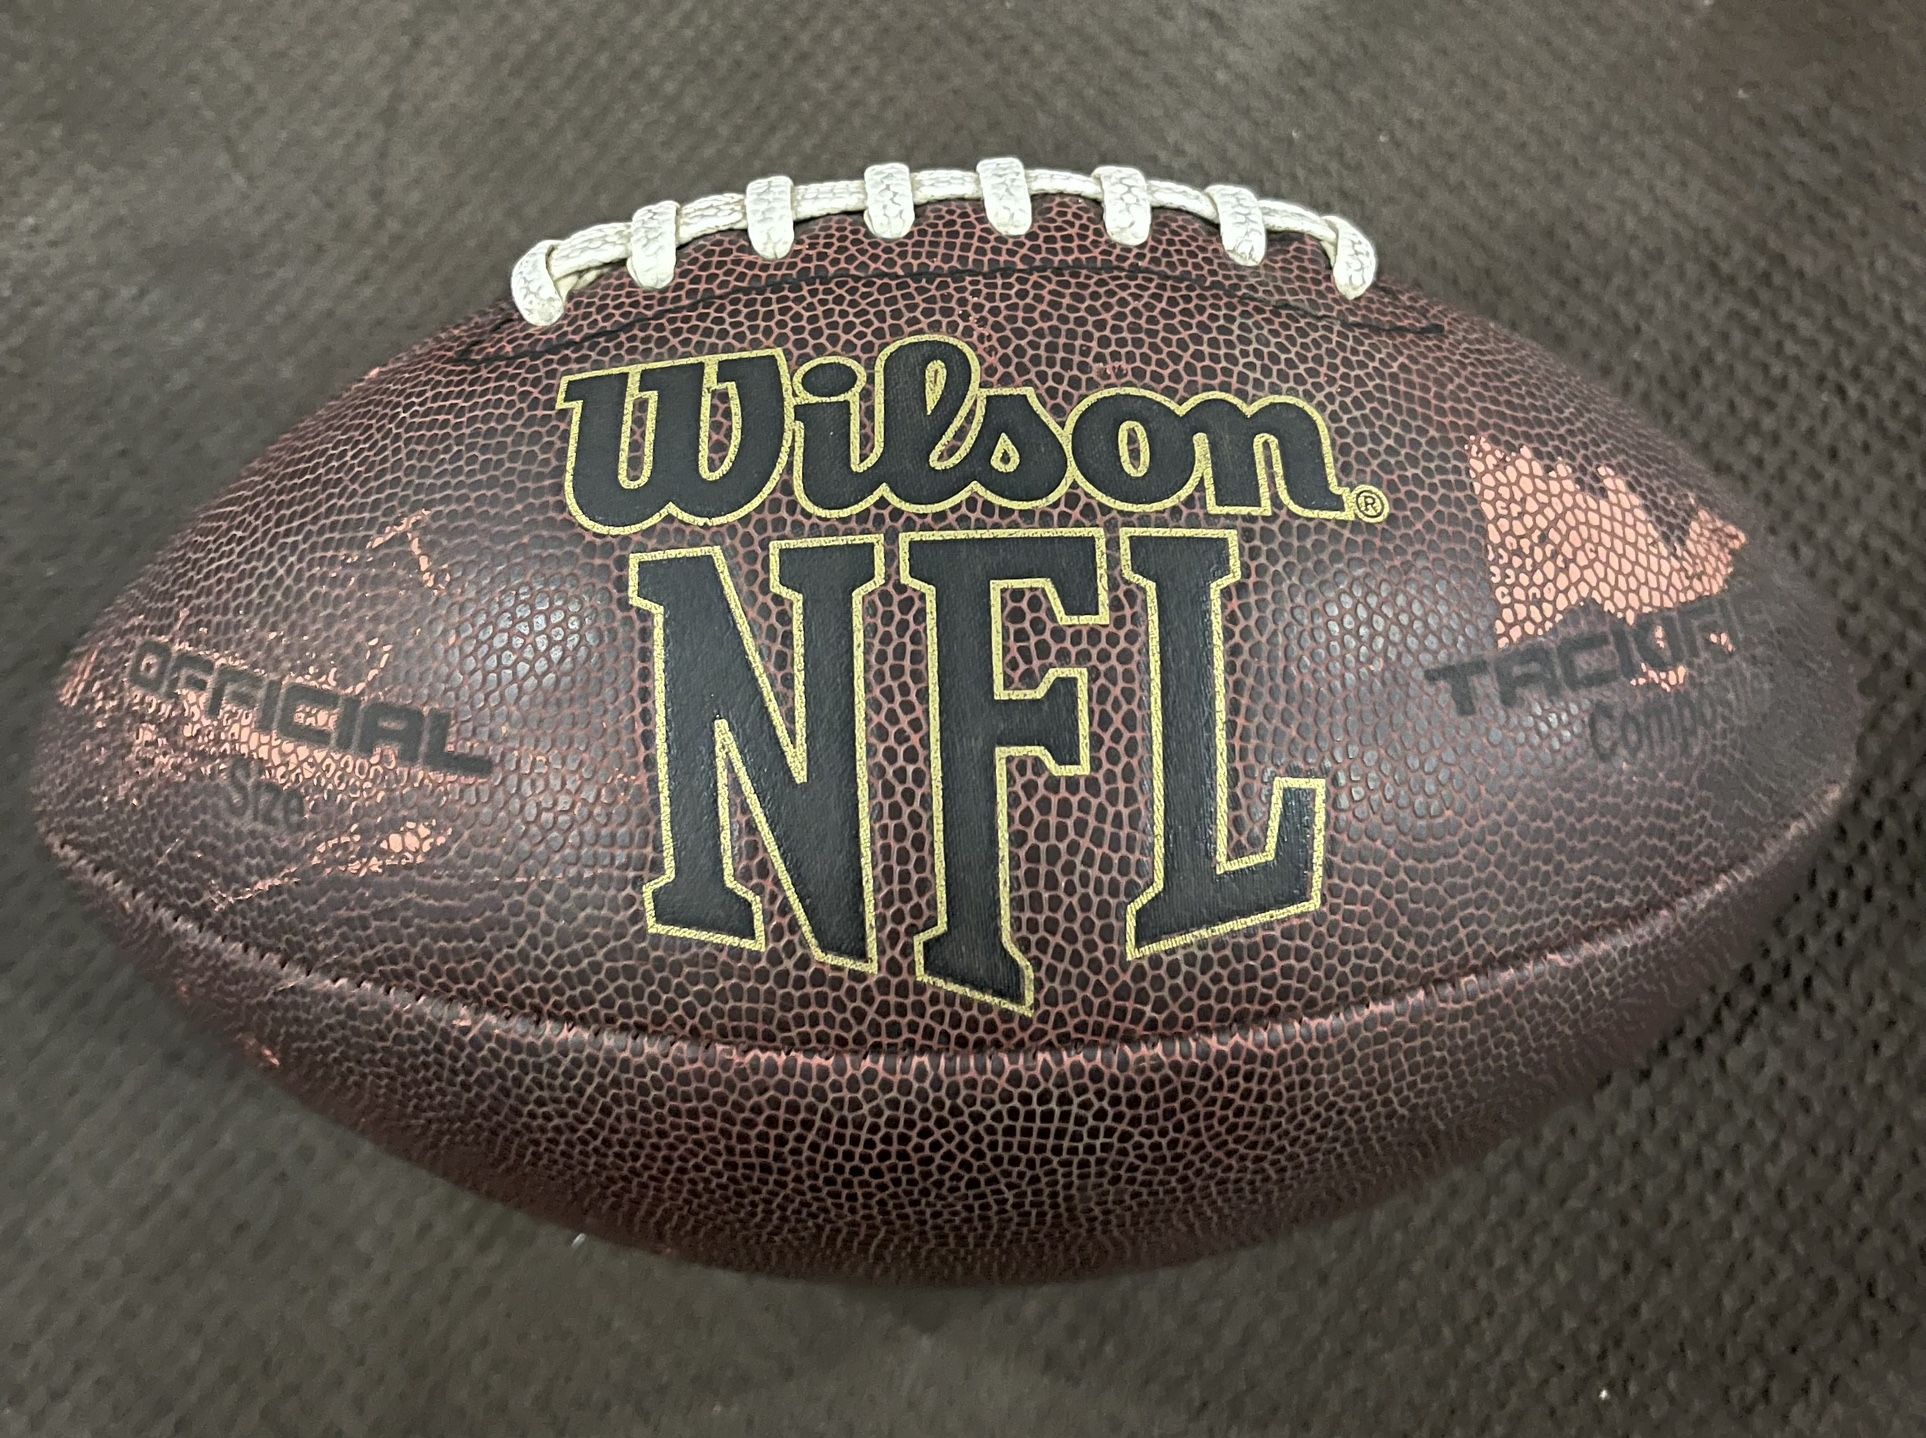 NFL Wilson Football 